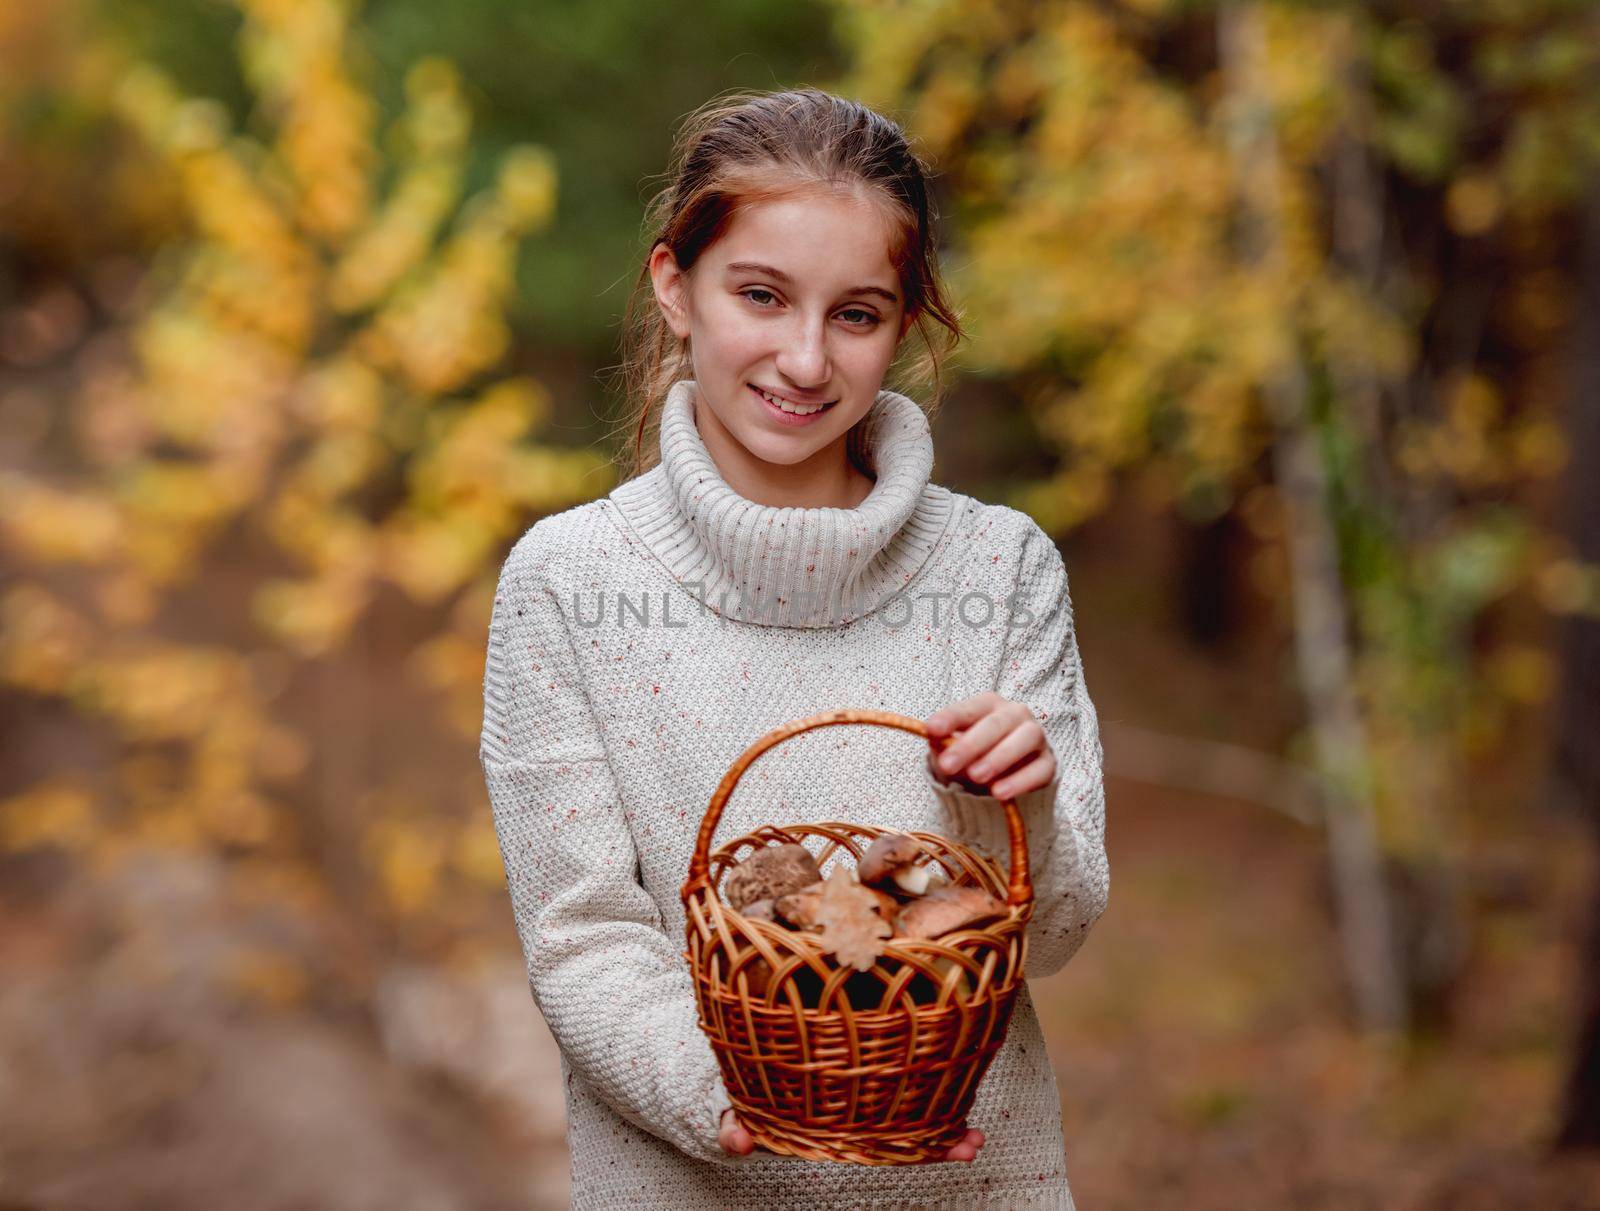 Teenage girl holding basket with edible mushrooms by tan4ikk1